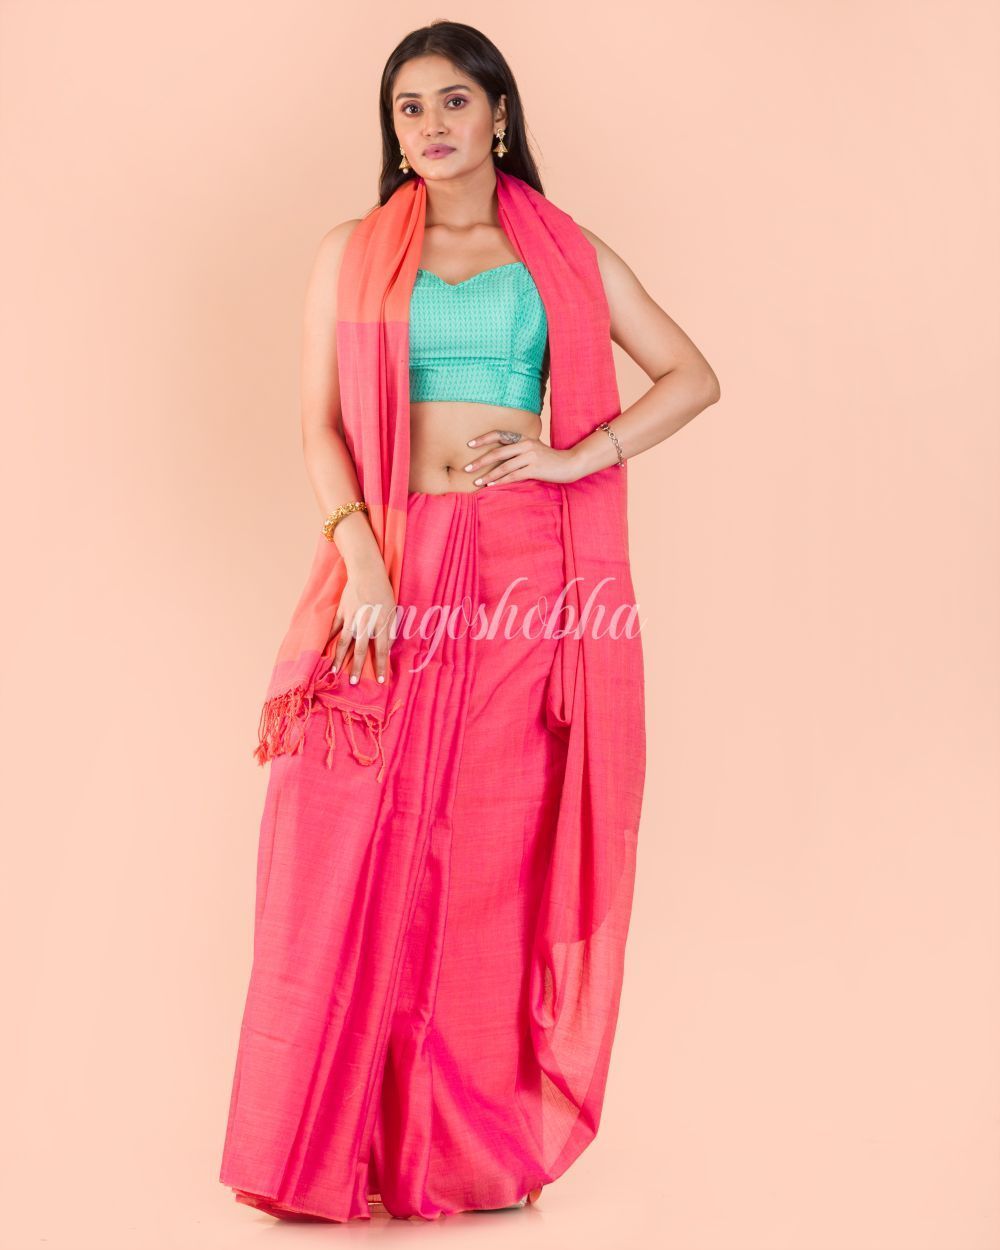 Women's Pink Handwoven Cotton Saree - Angoshobha